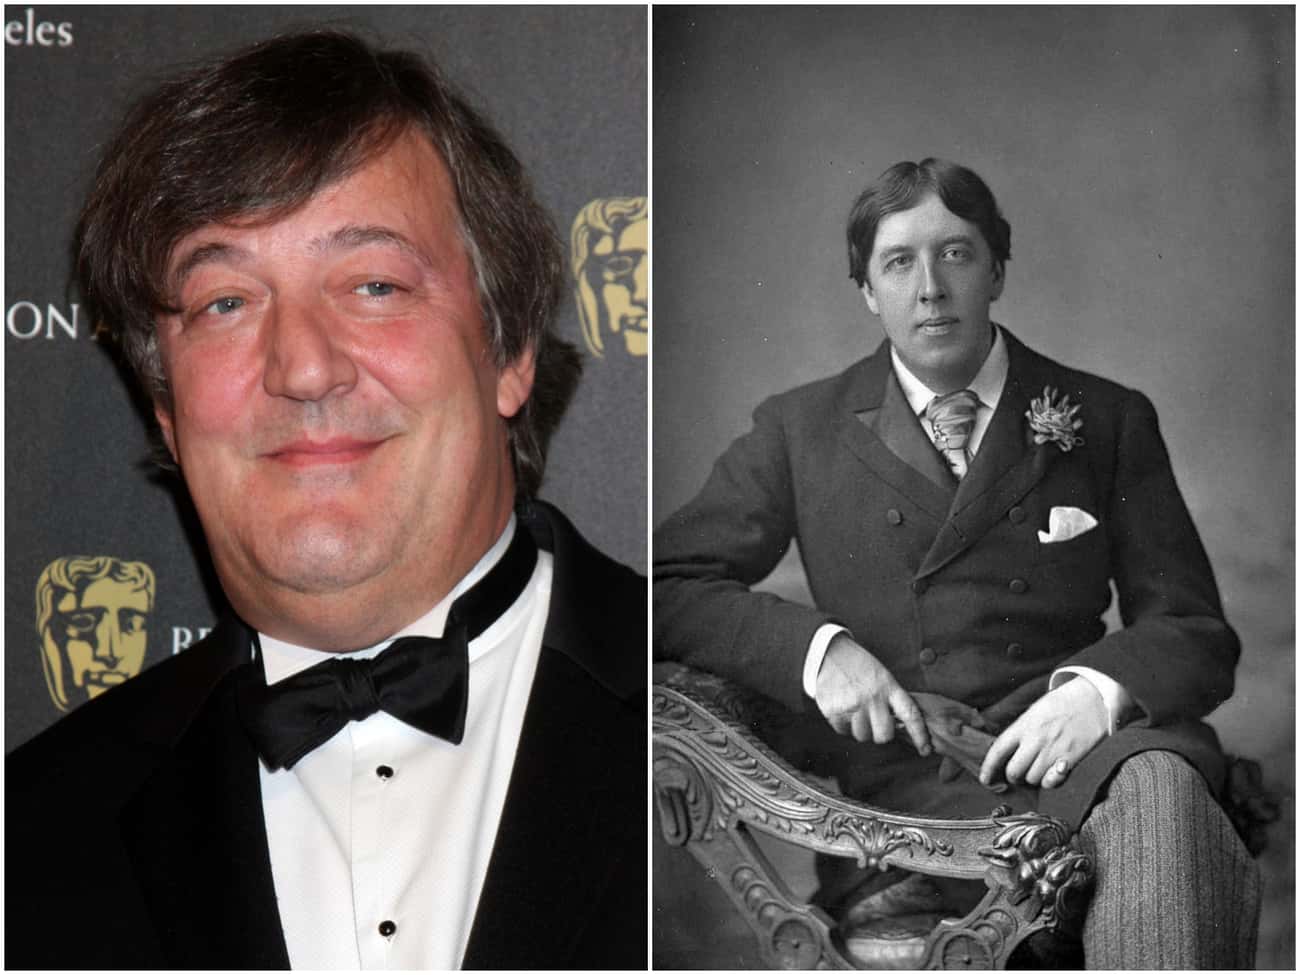 No Wonder Stephen Fry Portrayed Oscar Wilde